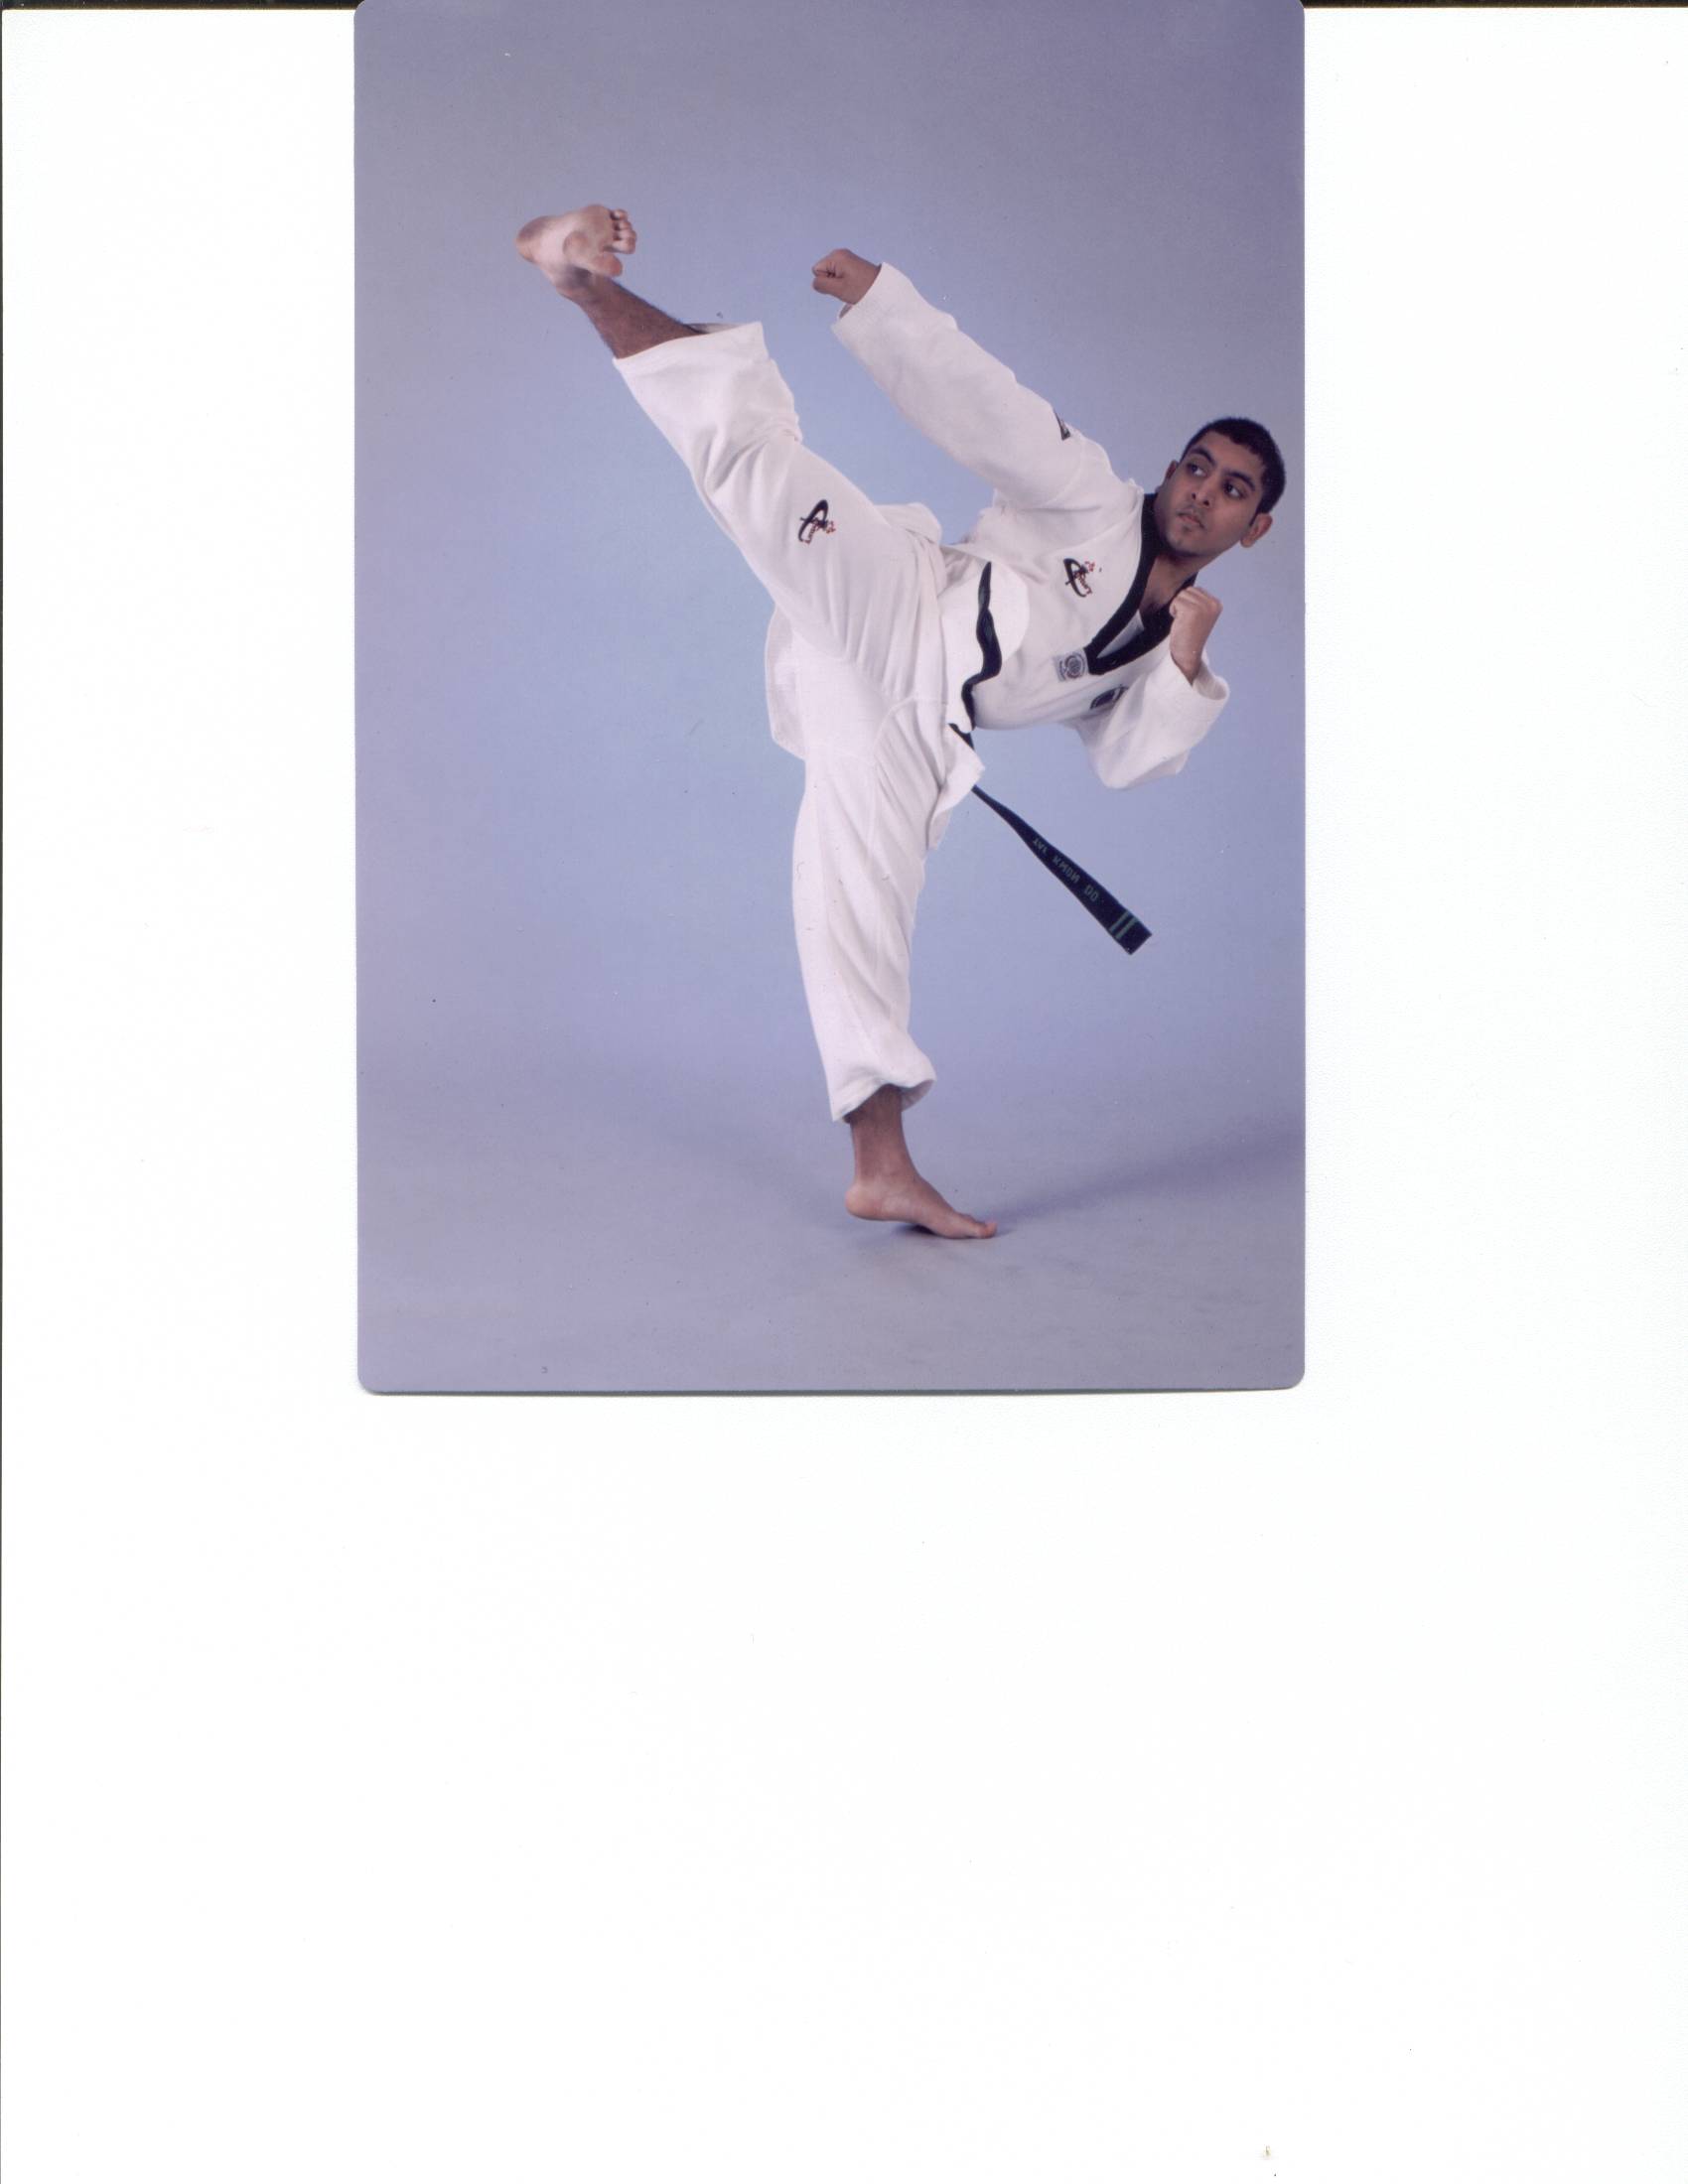 taekwondo front snap kick - Google Search